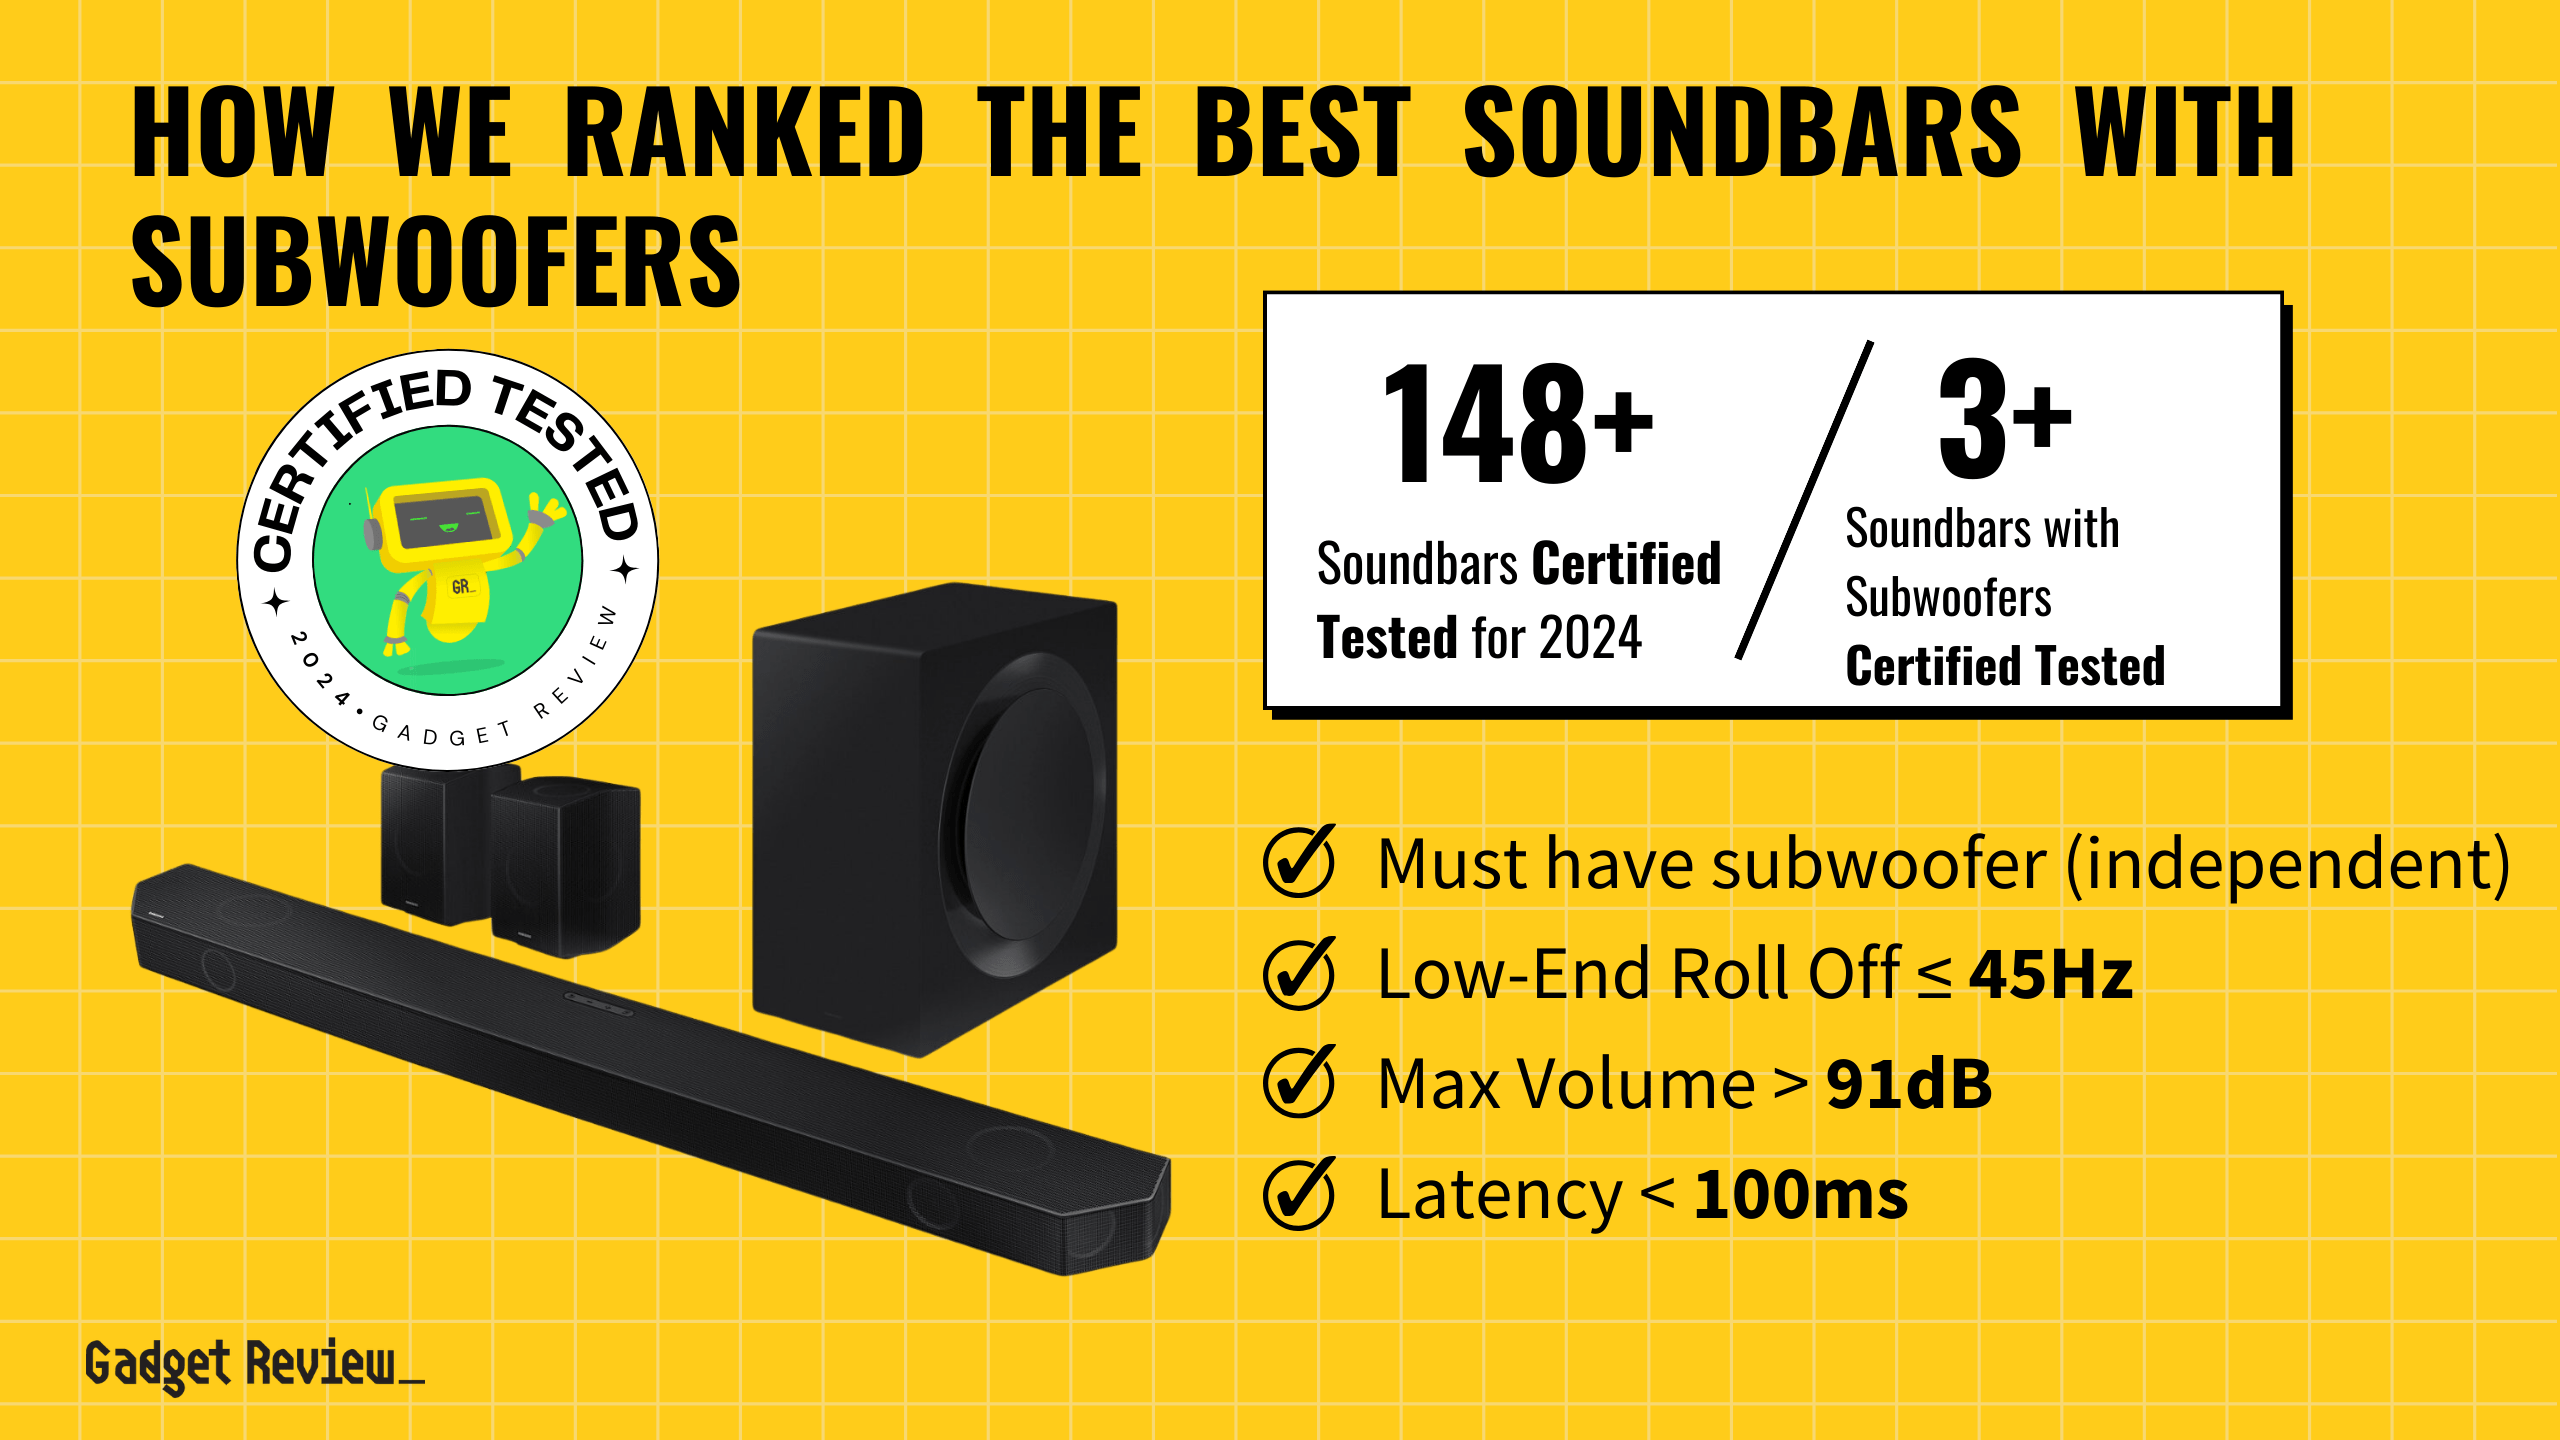 best soundbar with subwoofer guide that shows the top best soundbar model